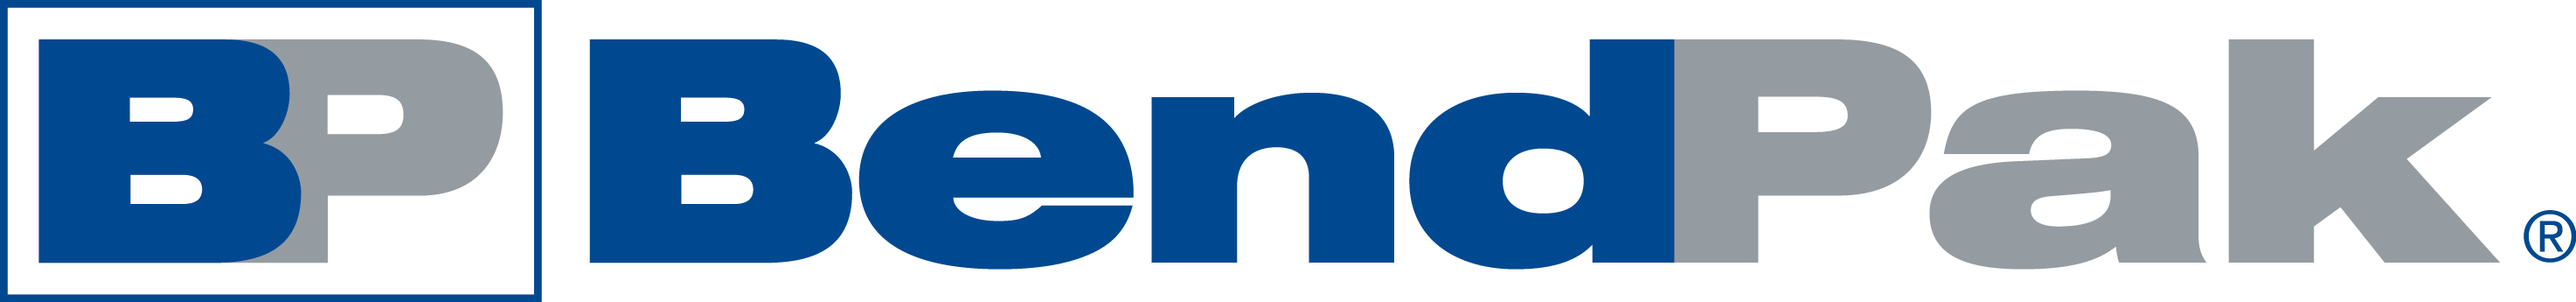 Bendpak logo